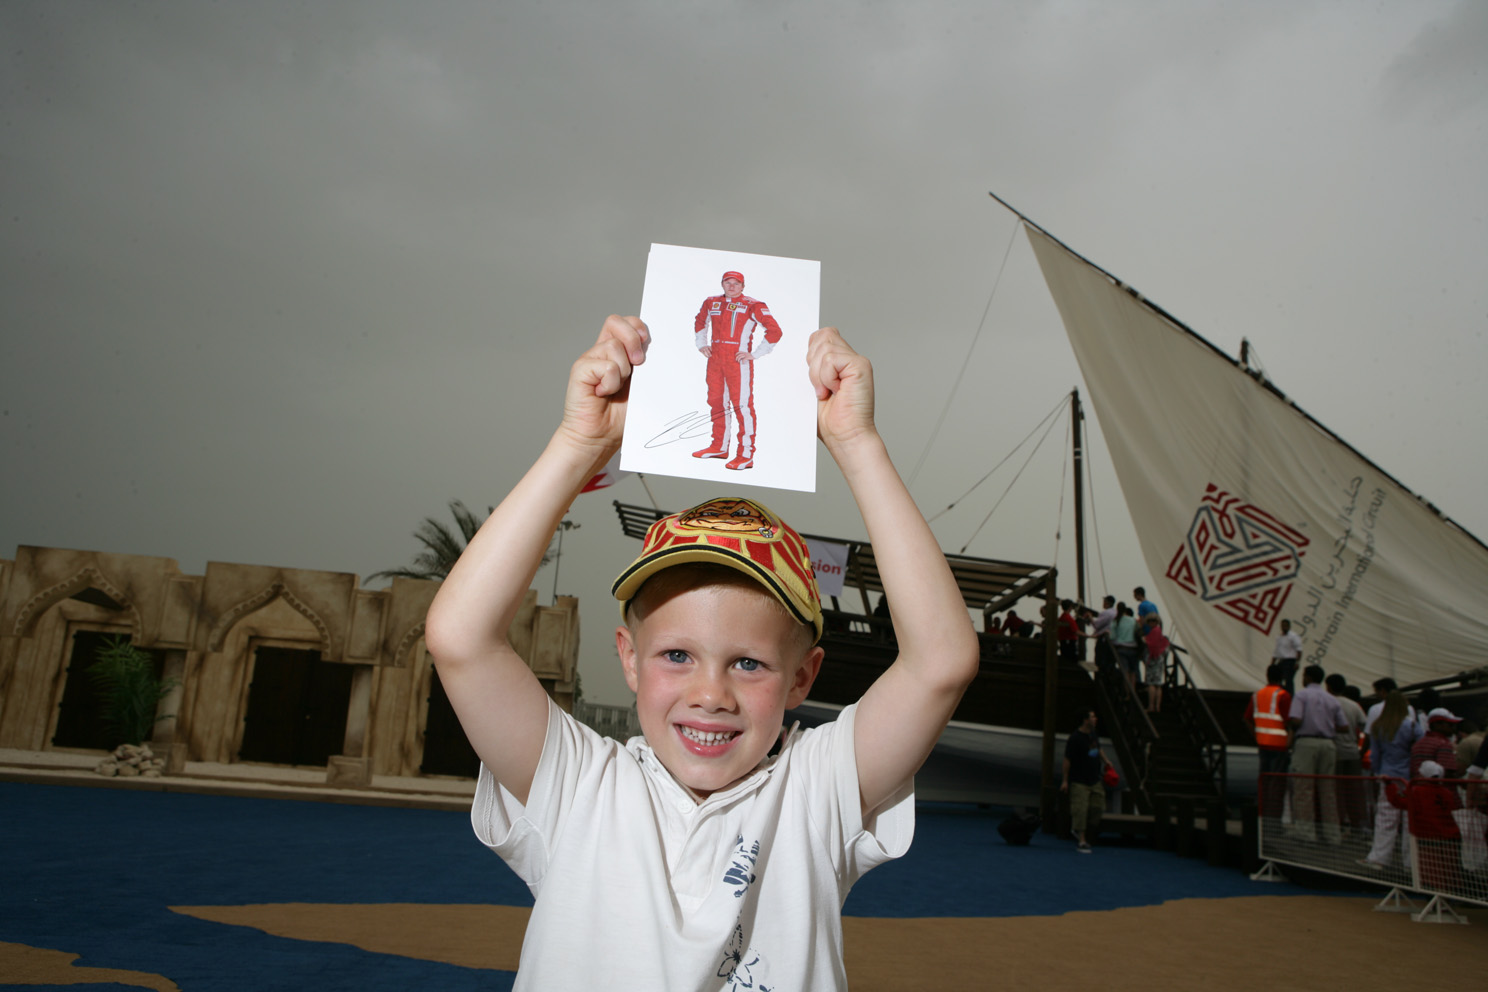 A young Kimi Räikkönen fan celebrates receiving a signed photo.